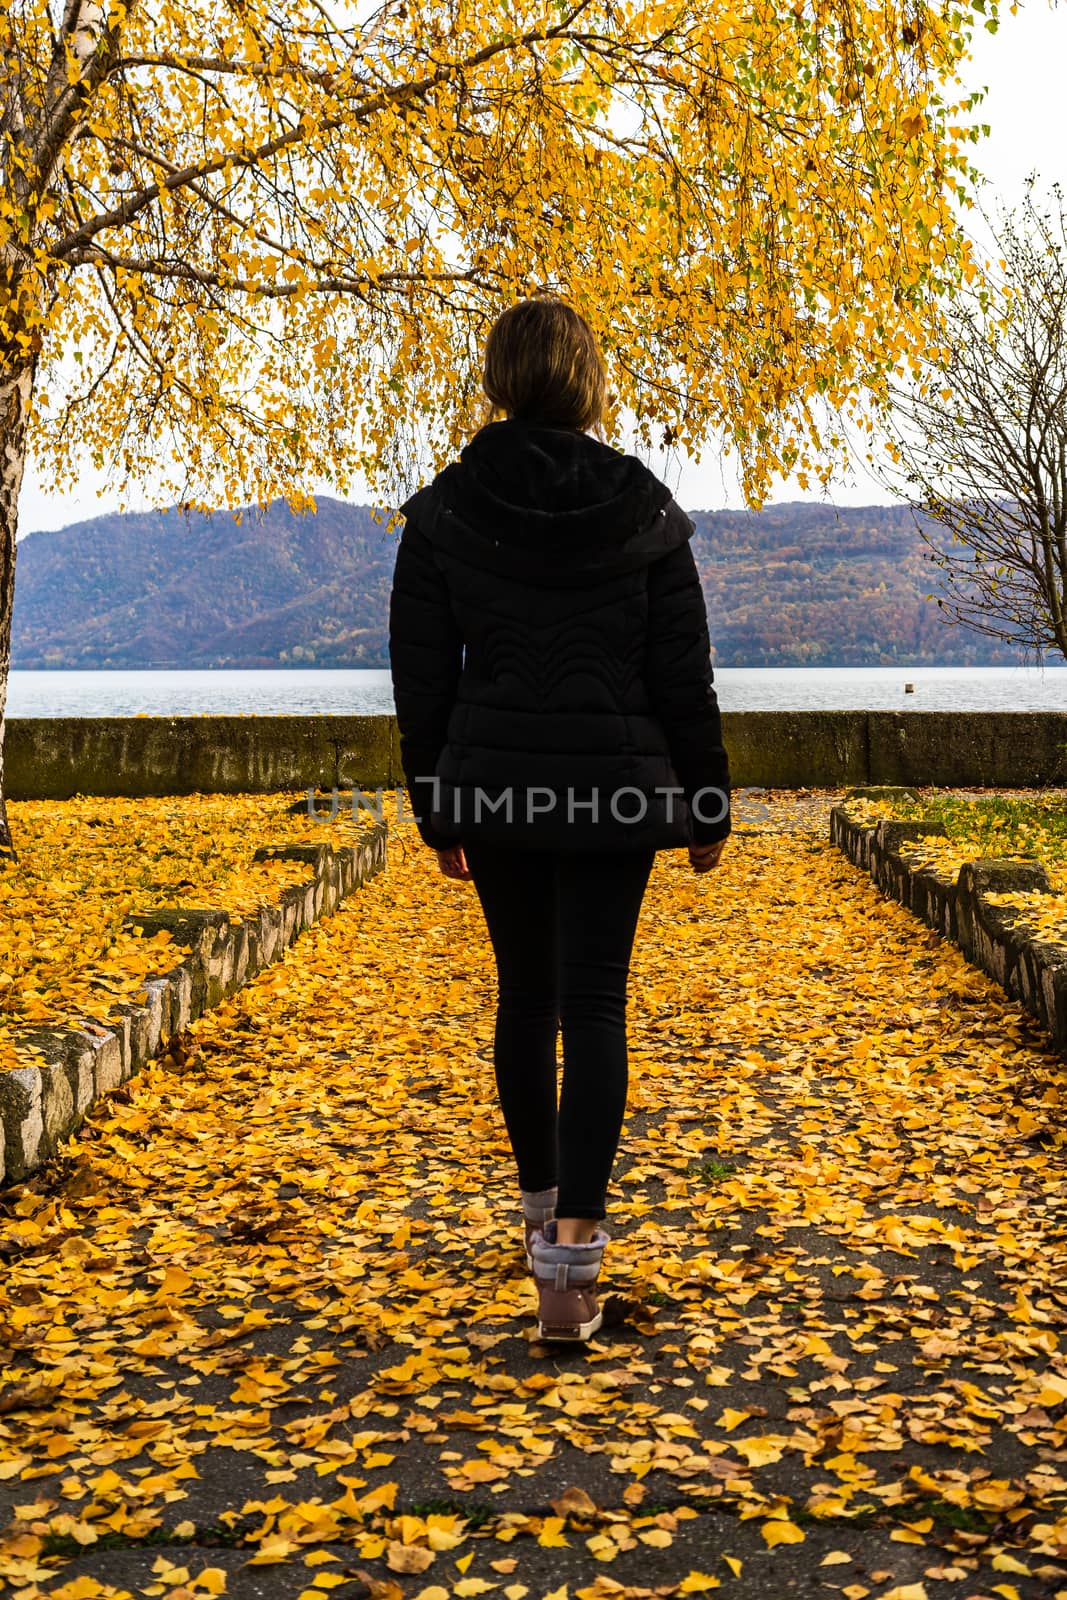  Autumn leaves fallen on alone woman walking on the autumn alley by vladispas